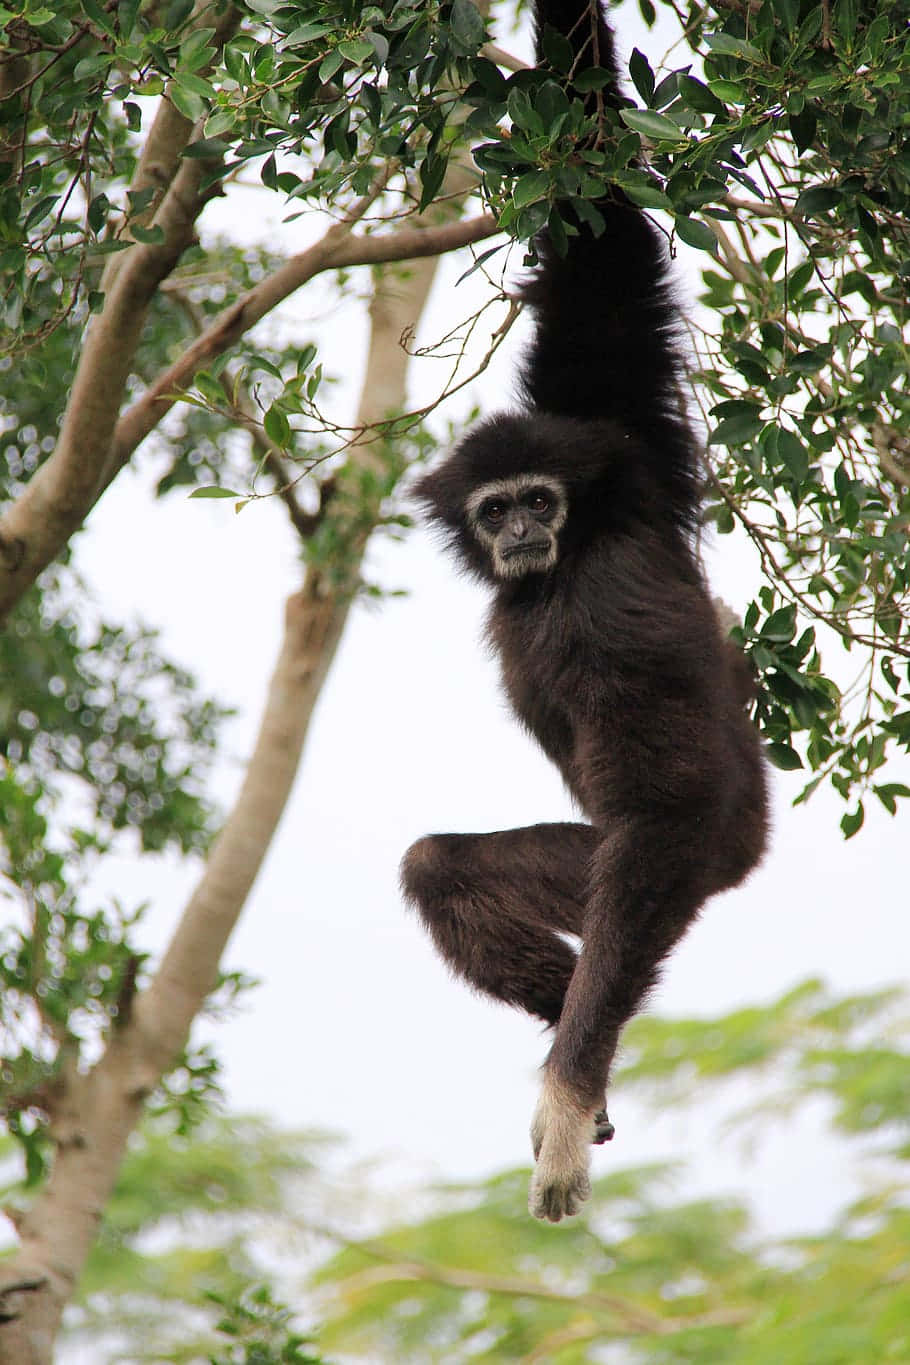 Iphonexs Bakgrundsbild Med En Hängande Gibbon.